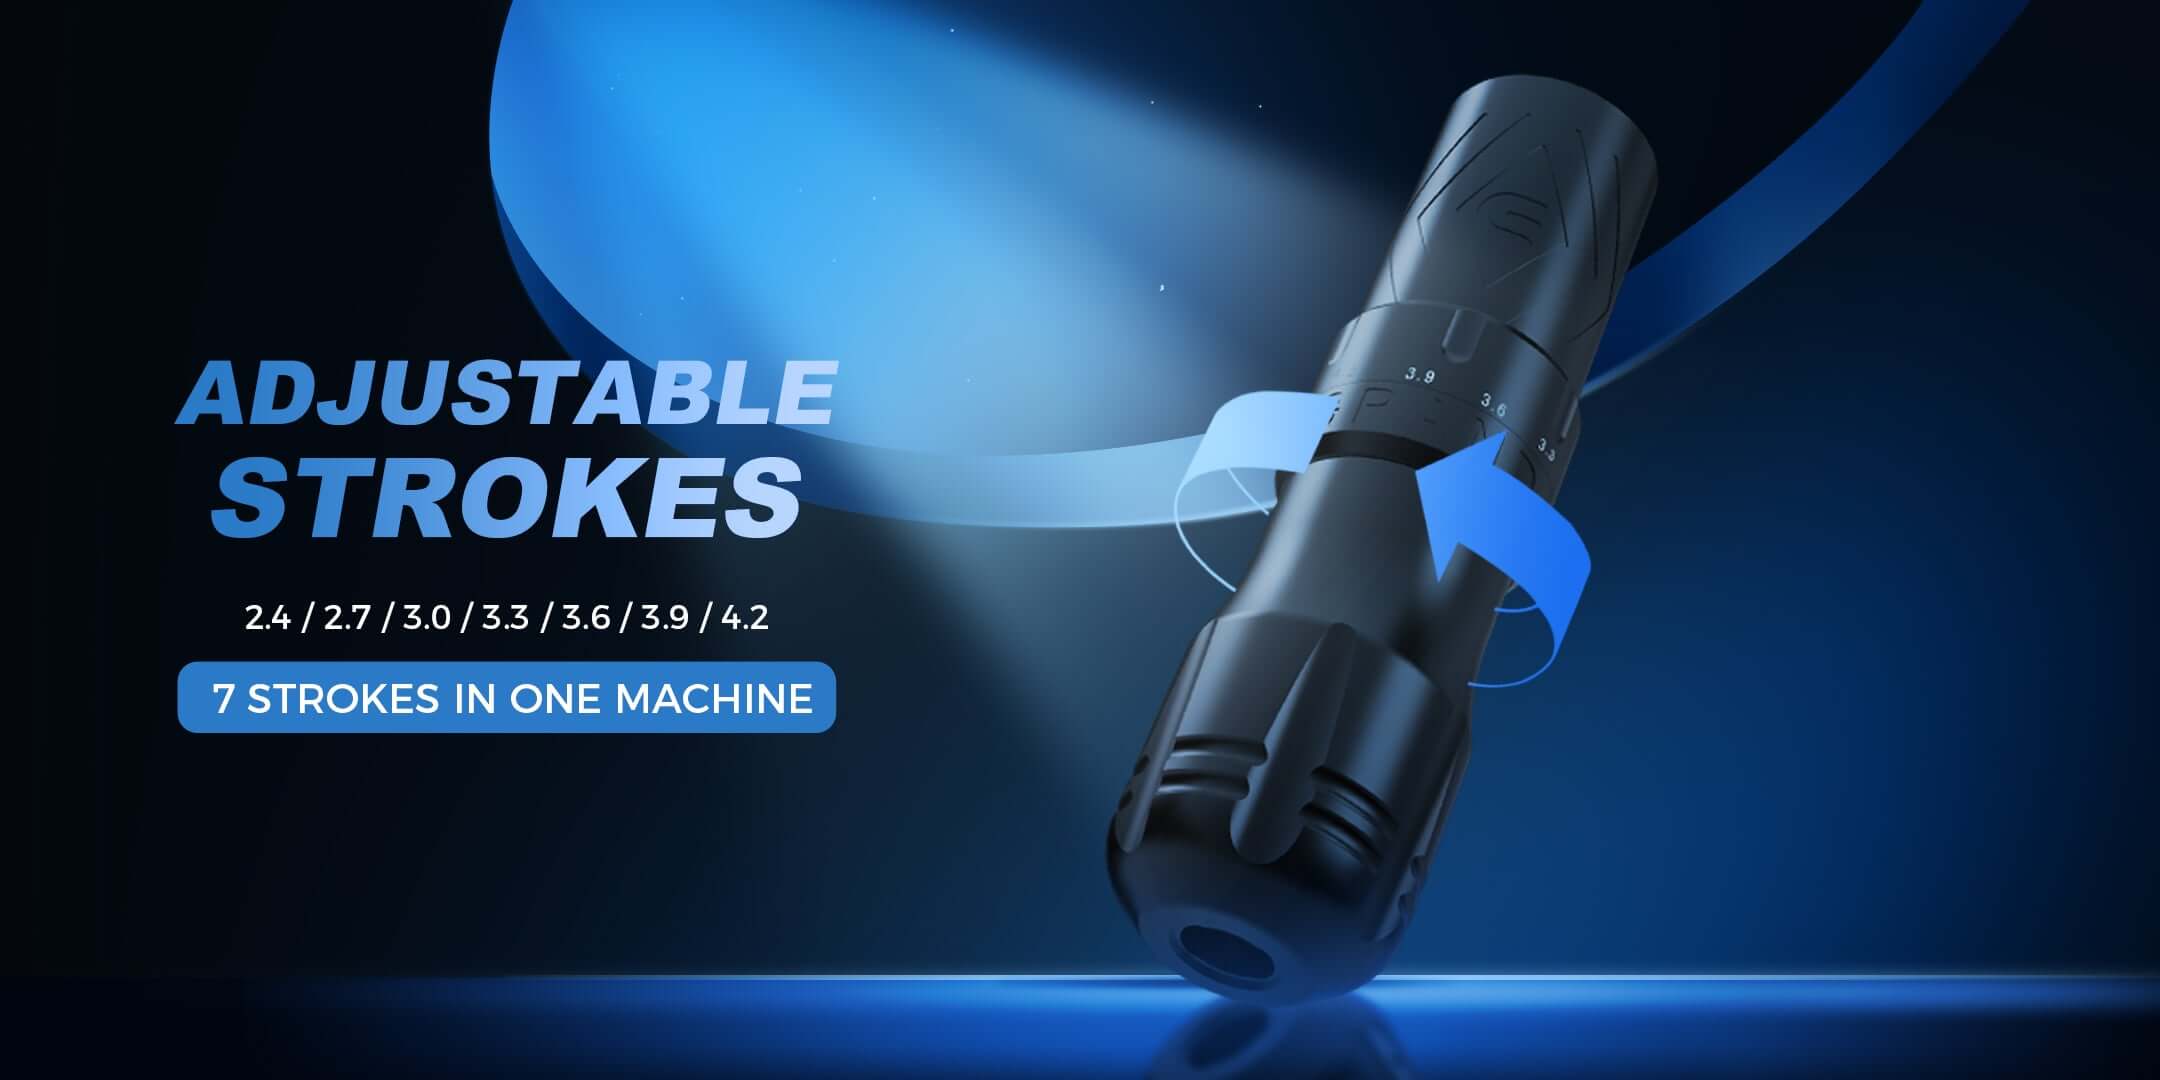 EMALLA GRAND Wireless Tattoo Pen Machine with 7 adjustbale strokes in one machine